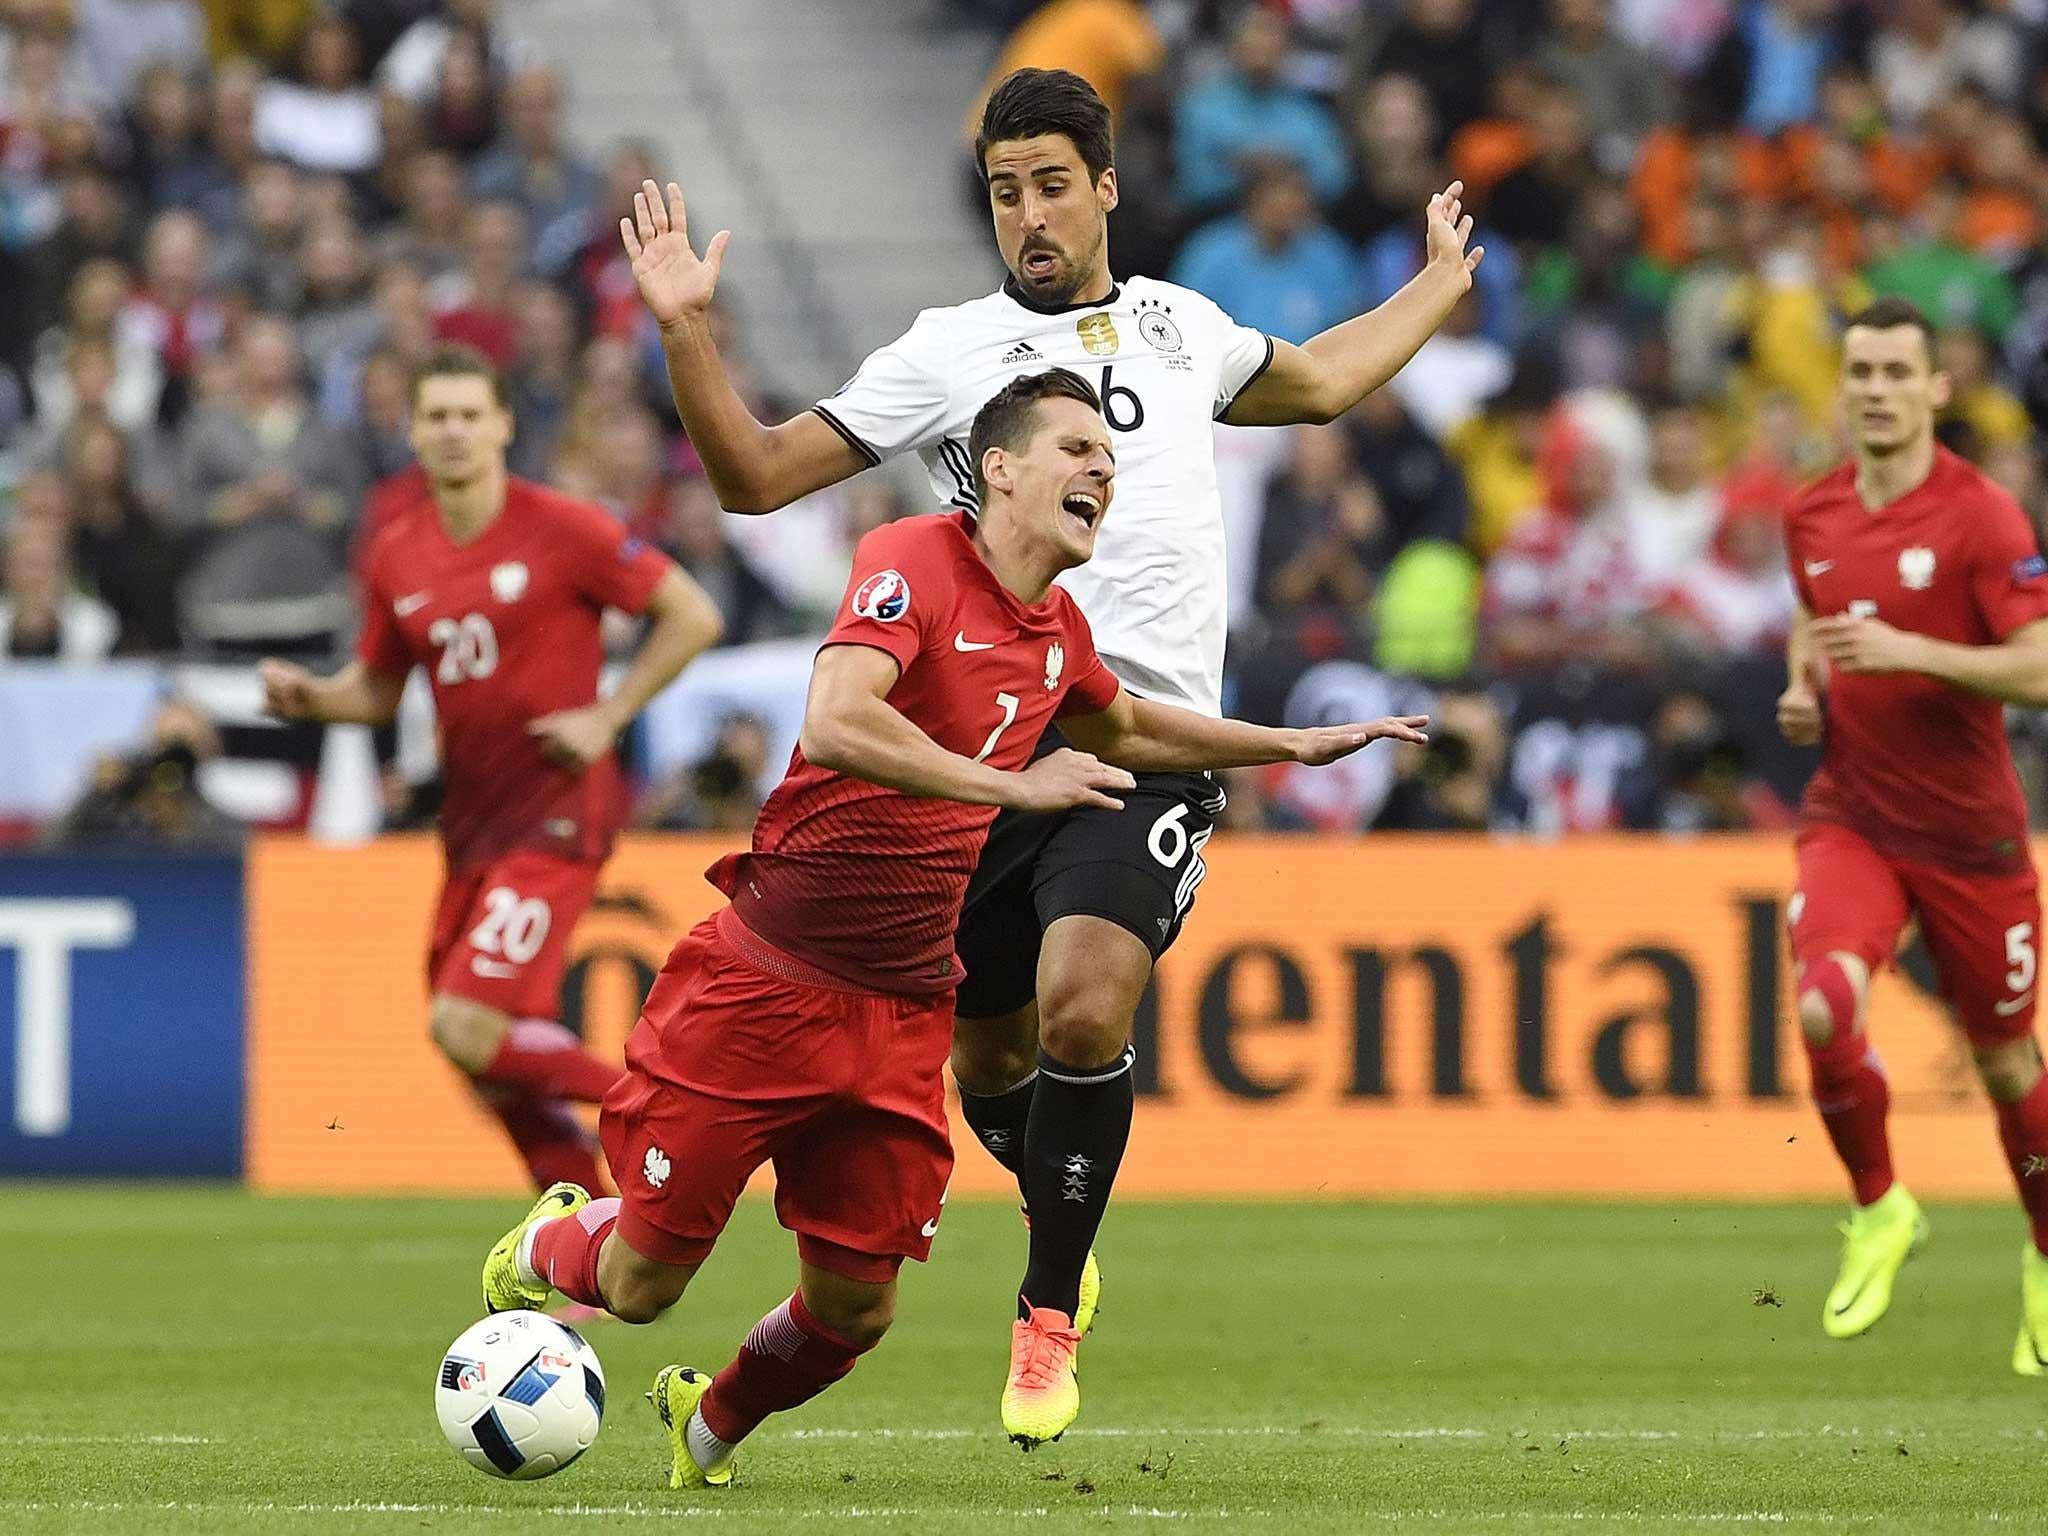 Germany's Sami Khedira (No 6) tackles Poland striker Arkadiusz Milik